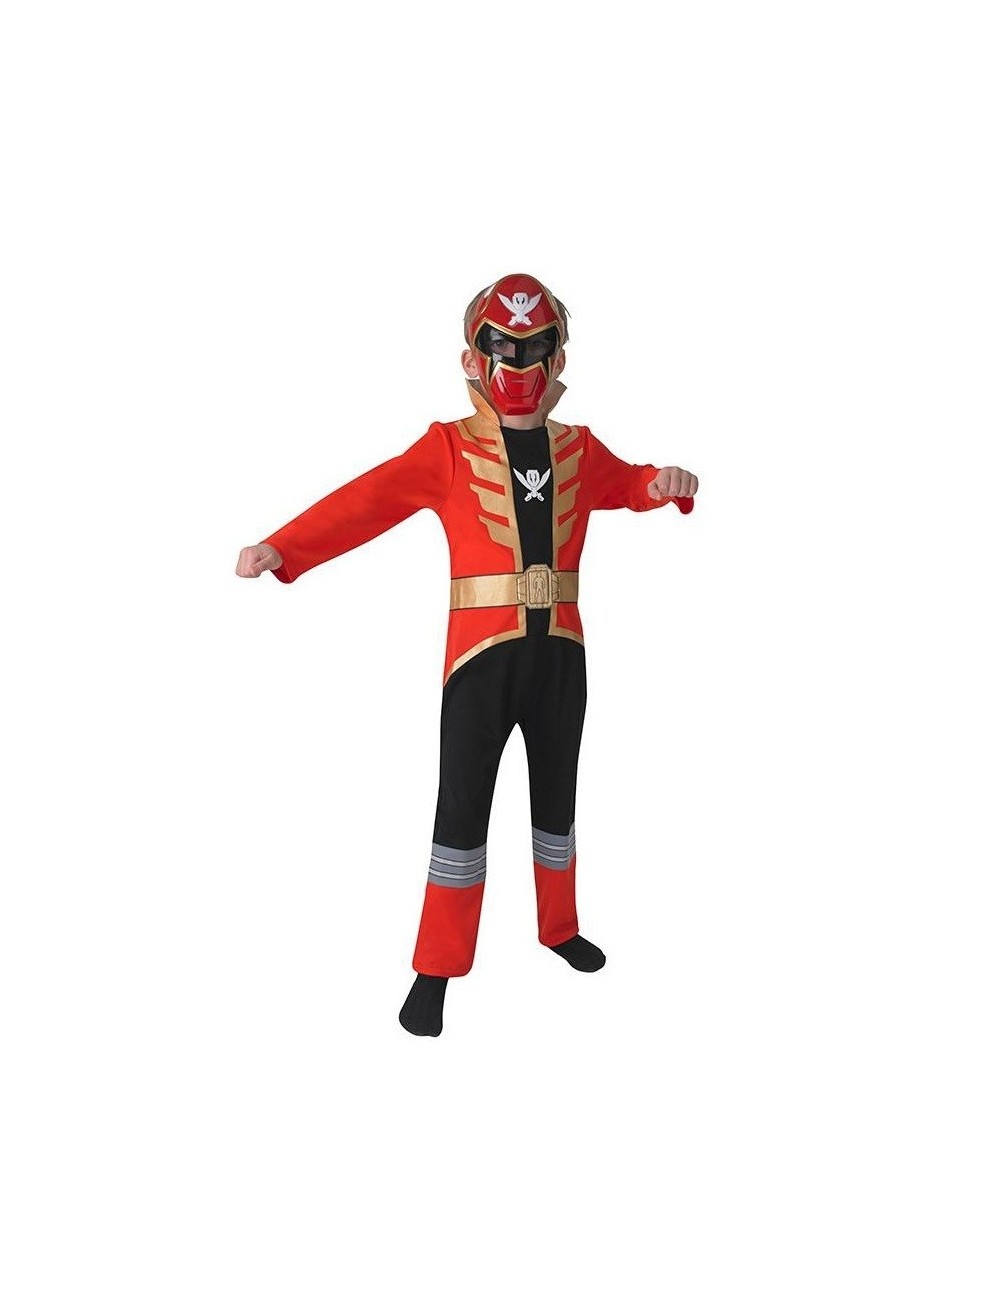 Miniature tonight intelligence Costum Power Rangers Megaforce, Red Ranger